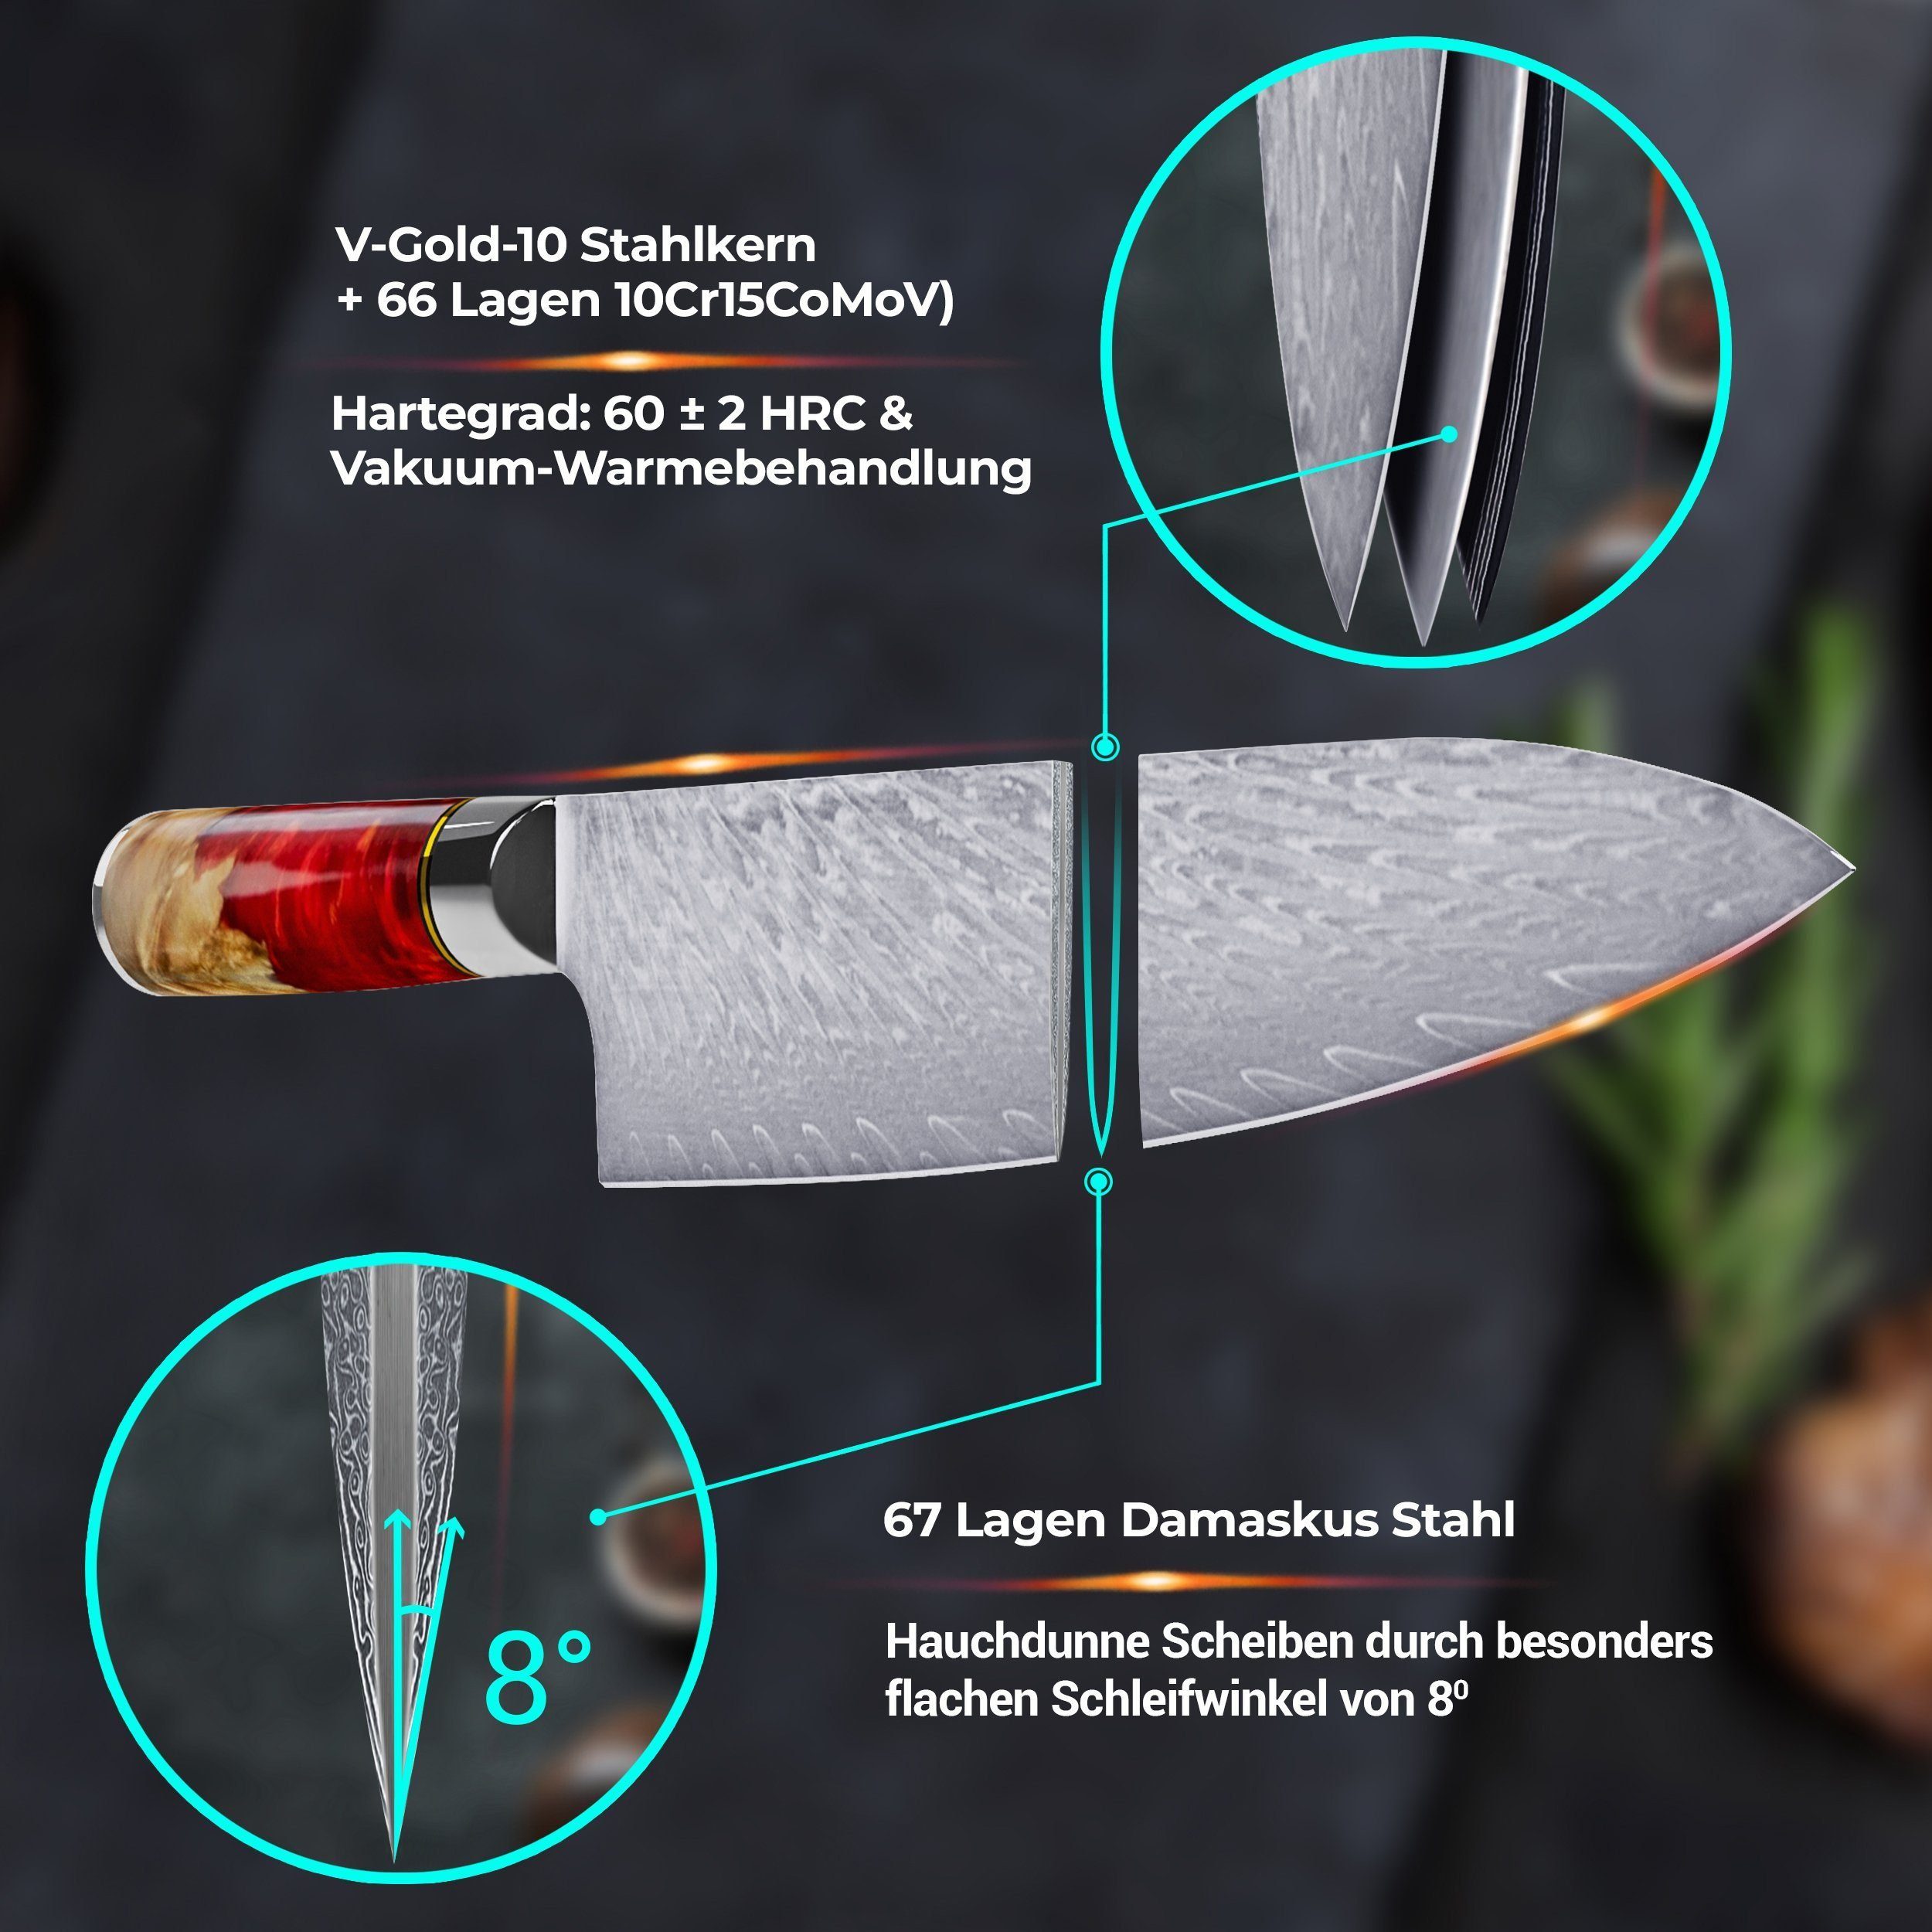 Damastmesser (Advanced Messer-Set Ruby Messerset Küchenmesser Line Calisso 6-tlg), Set, Messer Damaszener